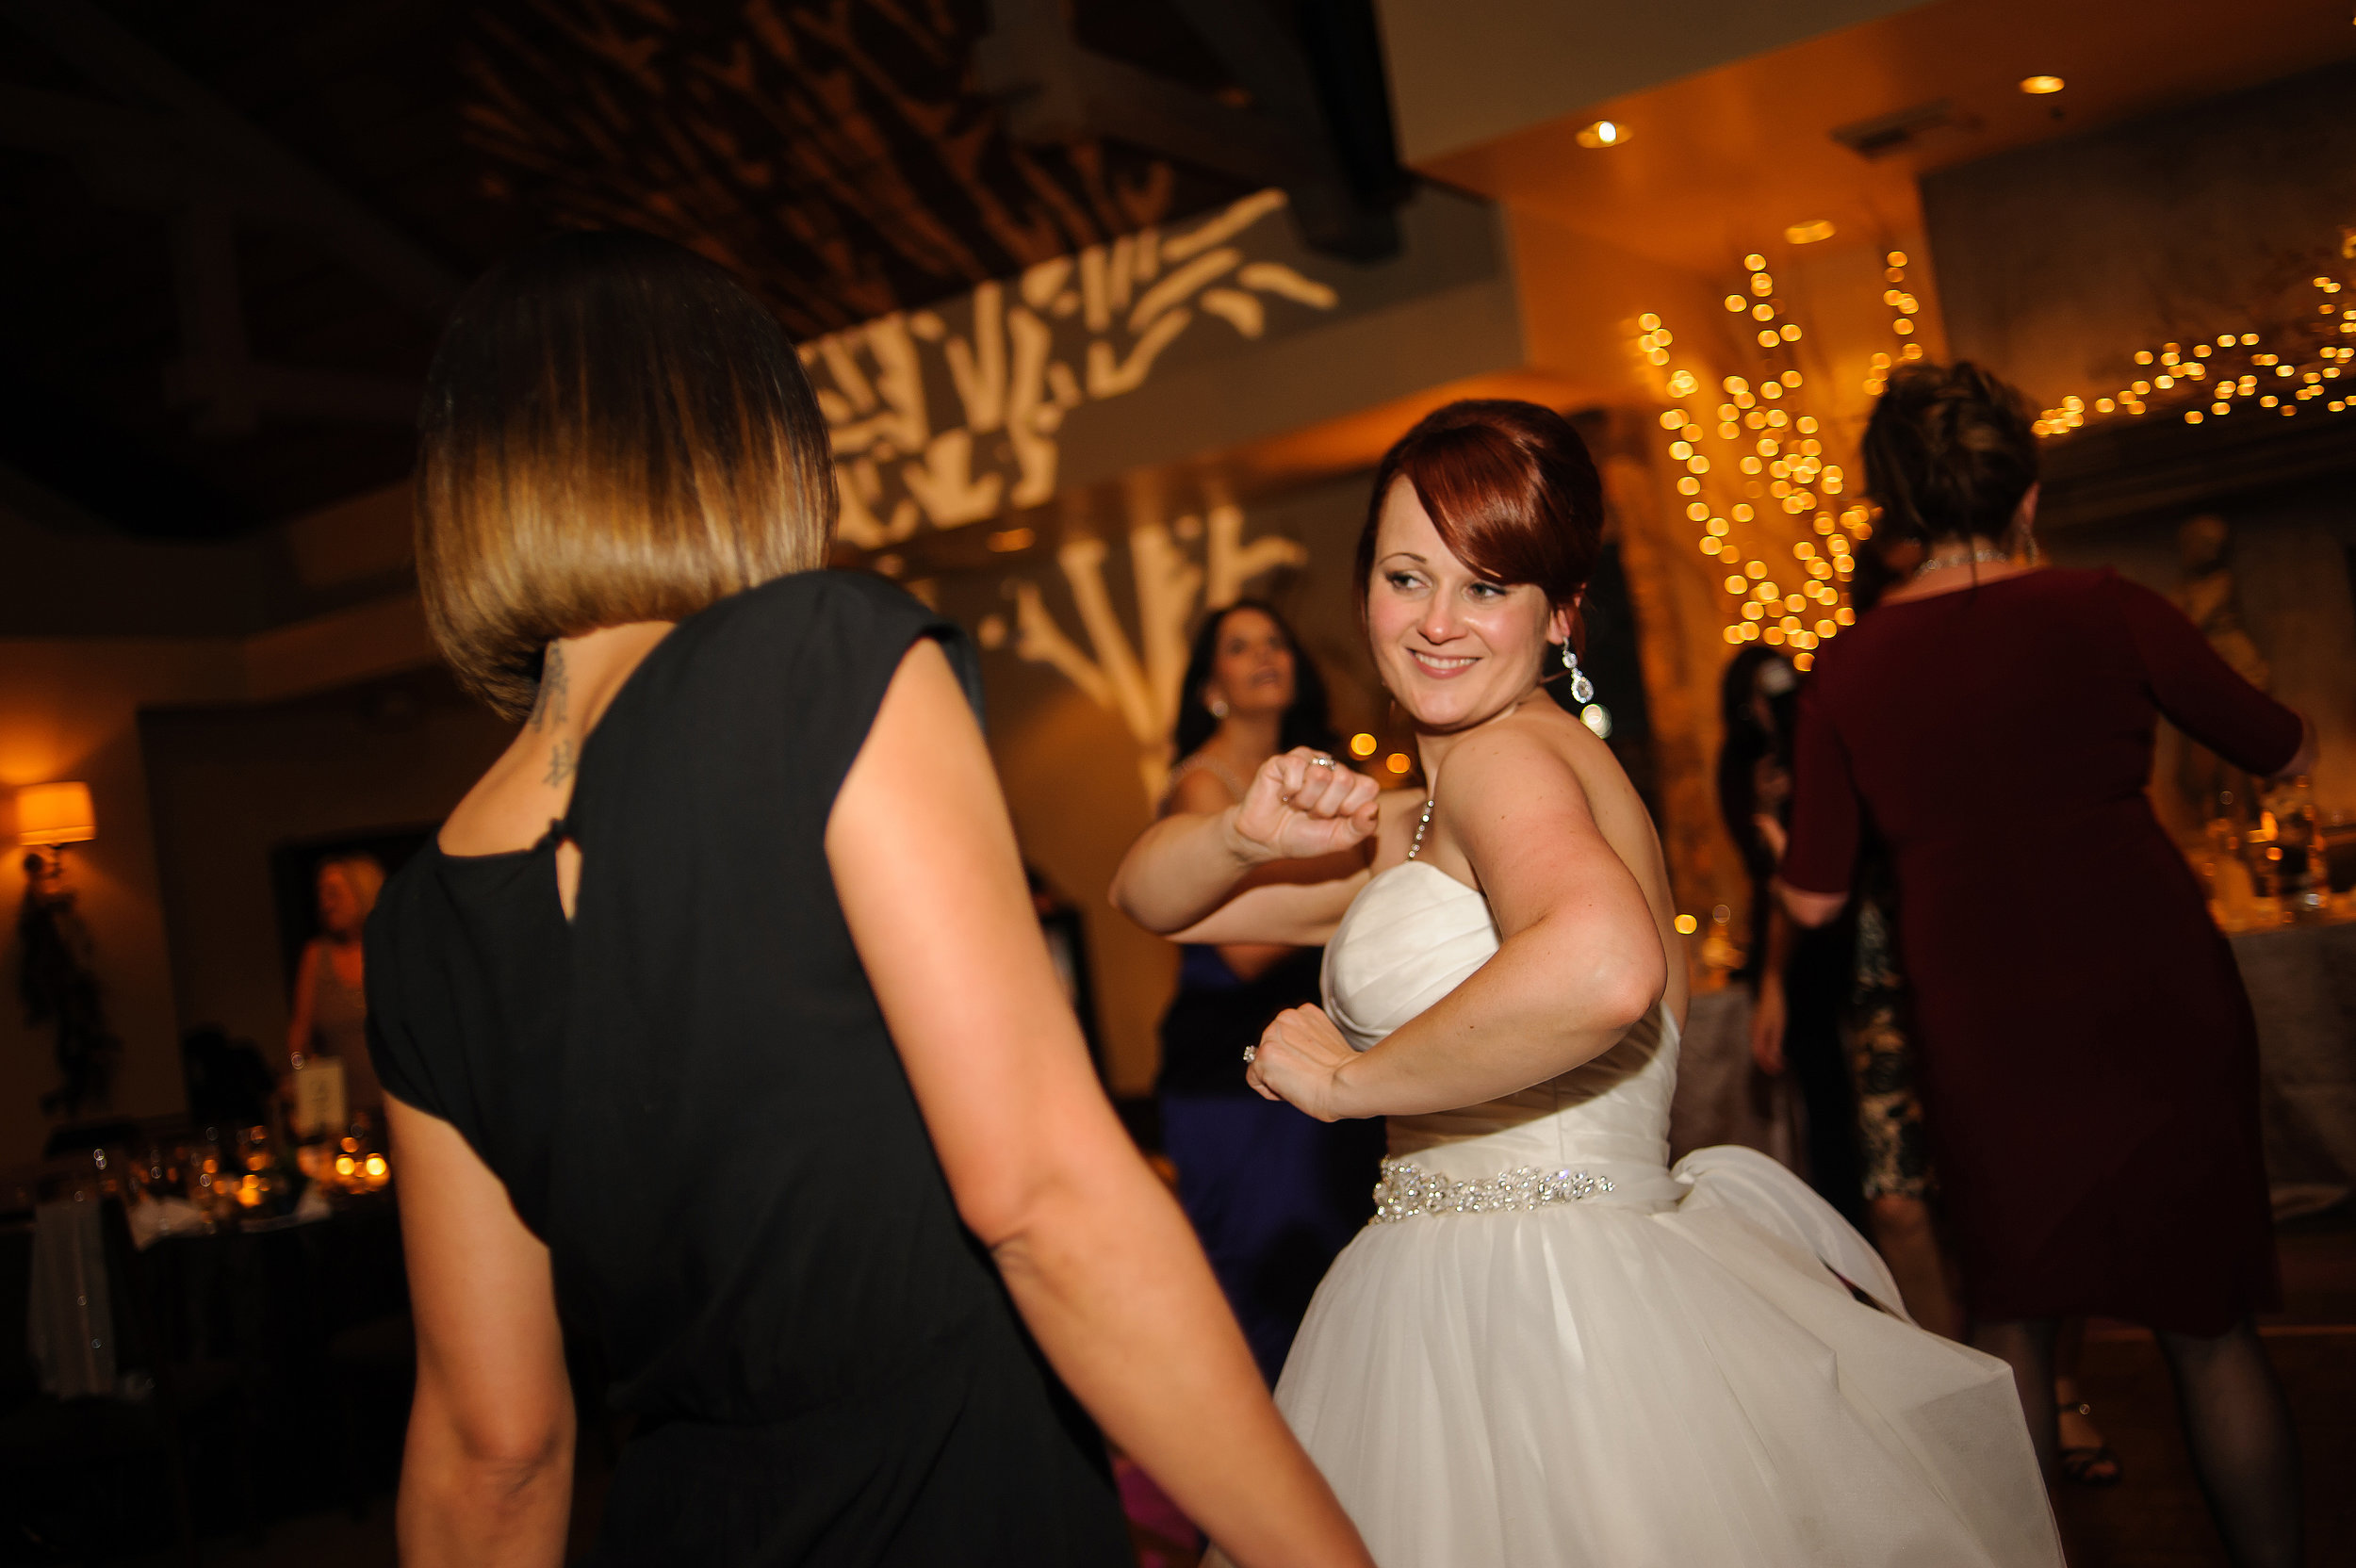  Bride dancing during wedding reception at Wine and Roses in Lodi California.&nbsp; 